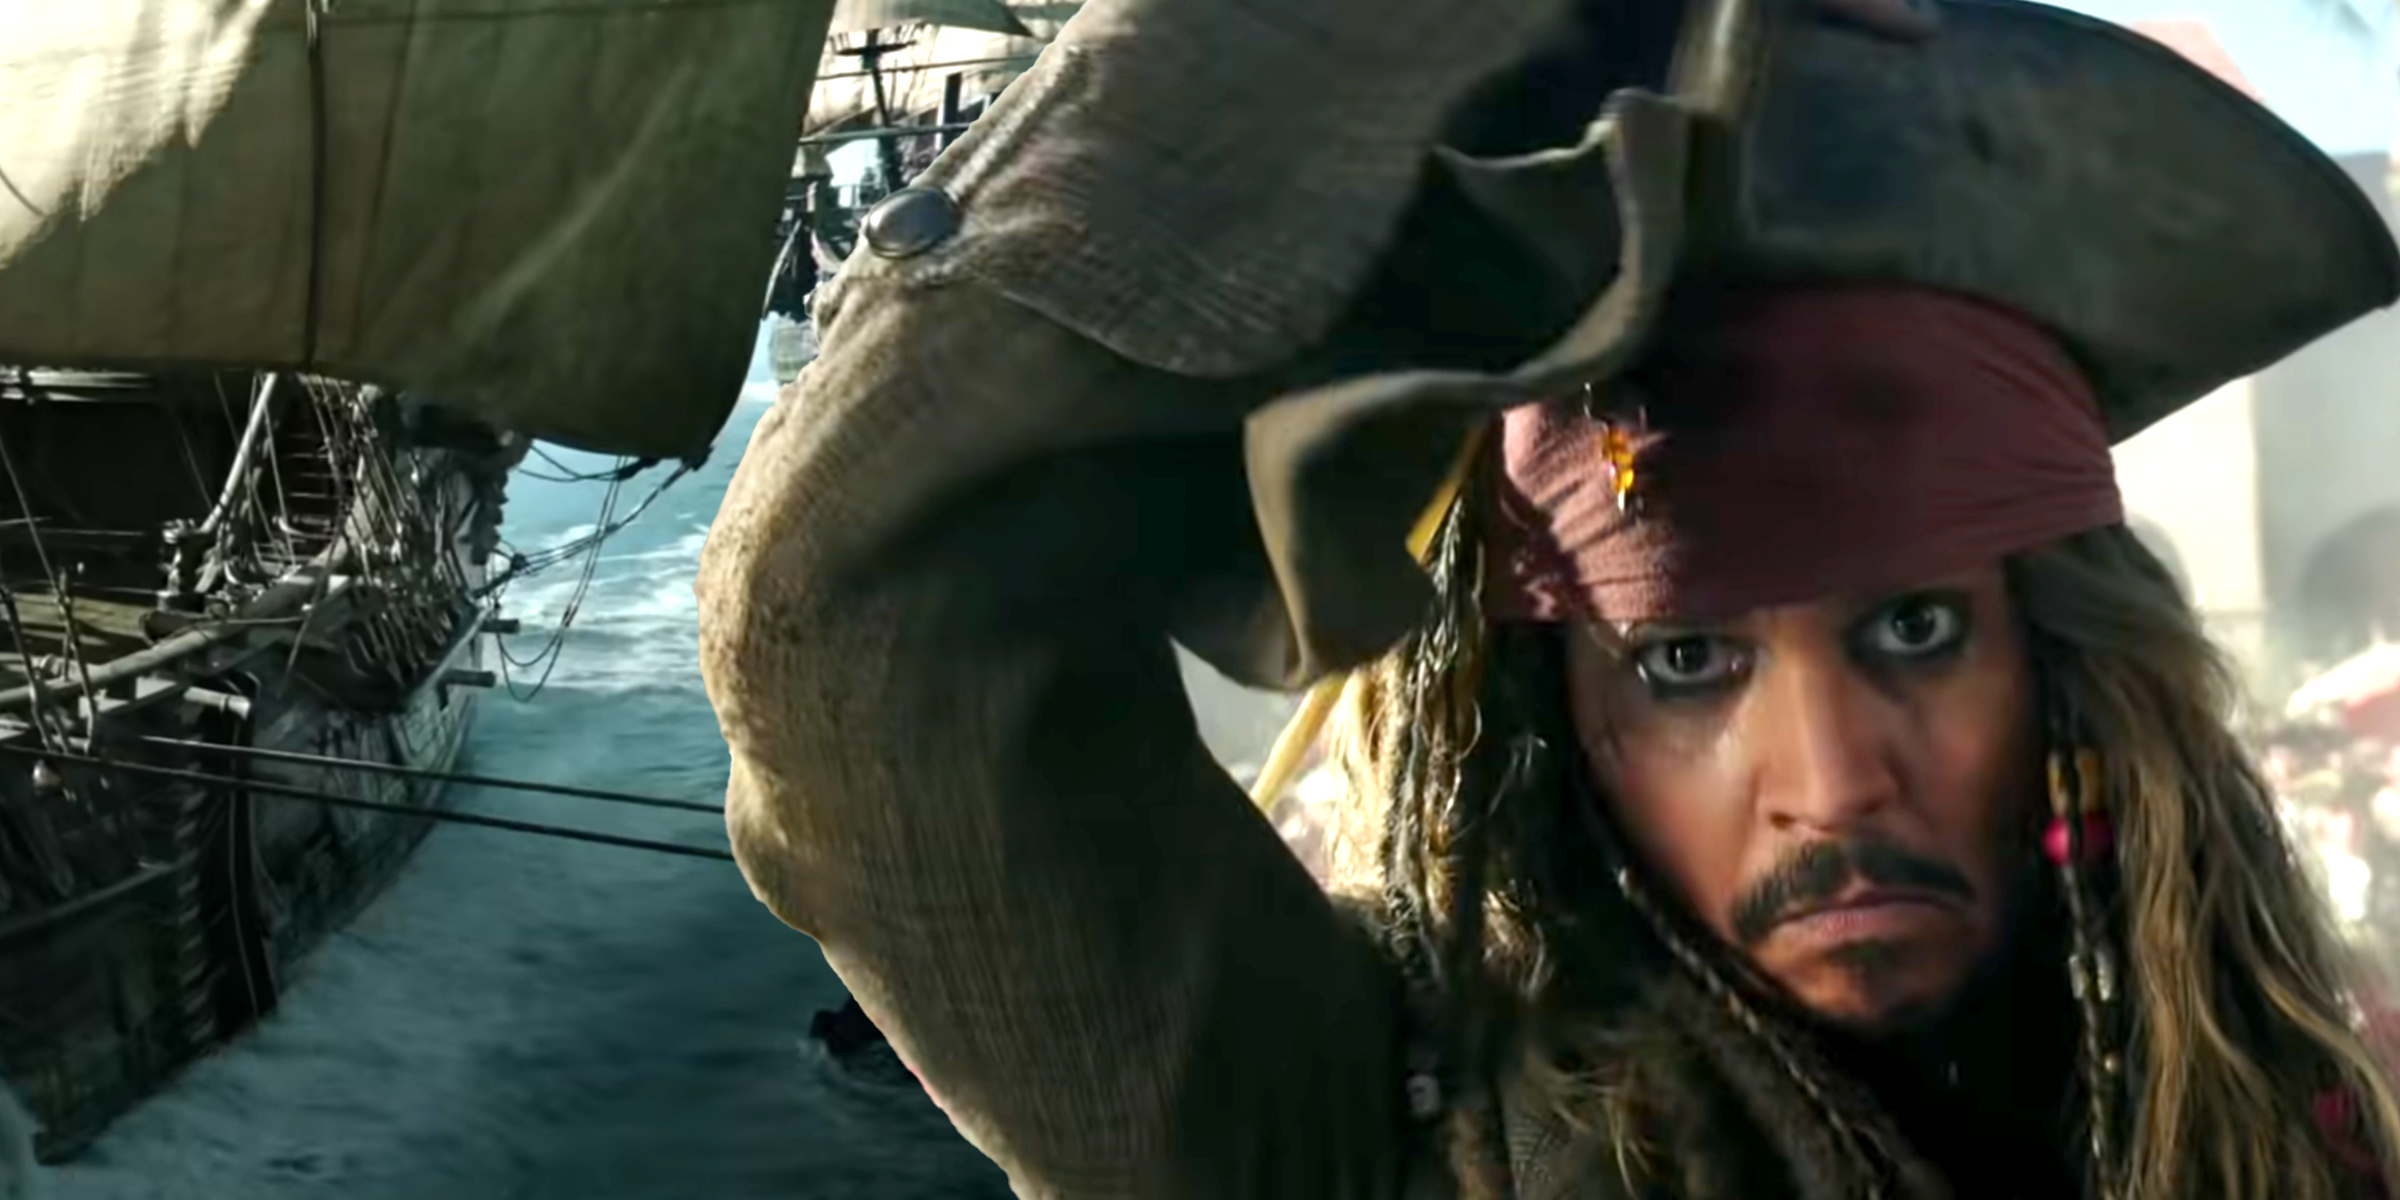 Promo Photo "Pirates of The Caribbean" | Source: Youtube/Walt Disney Studios